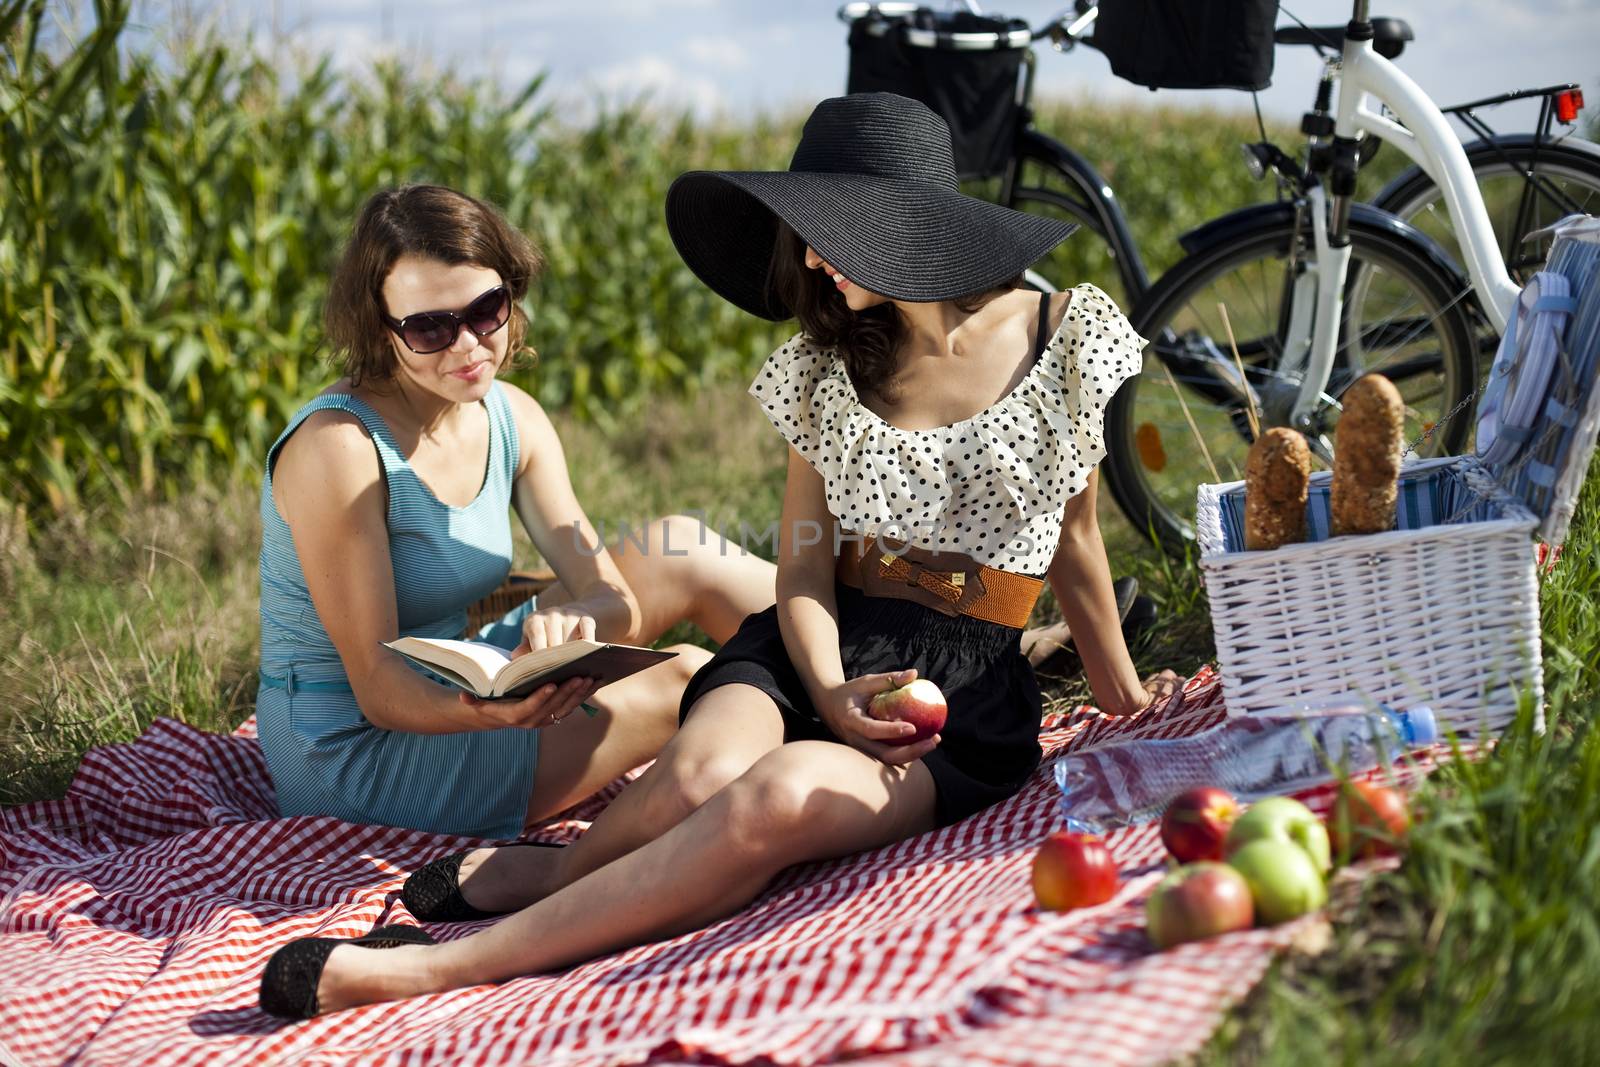 Two women in the picnic by JanPietruszka